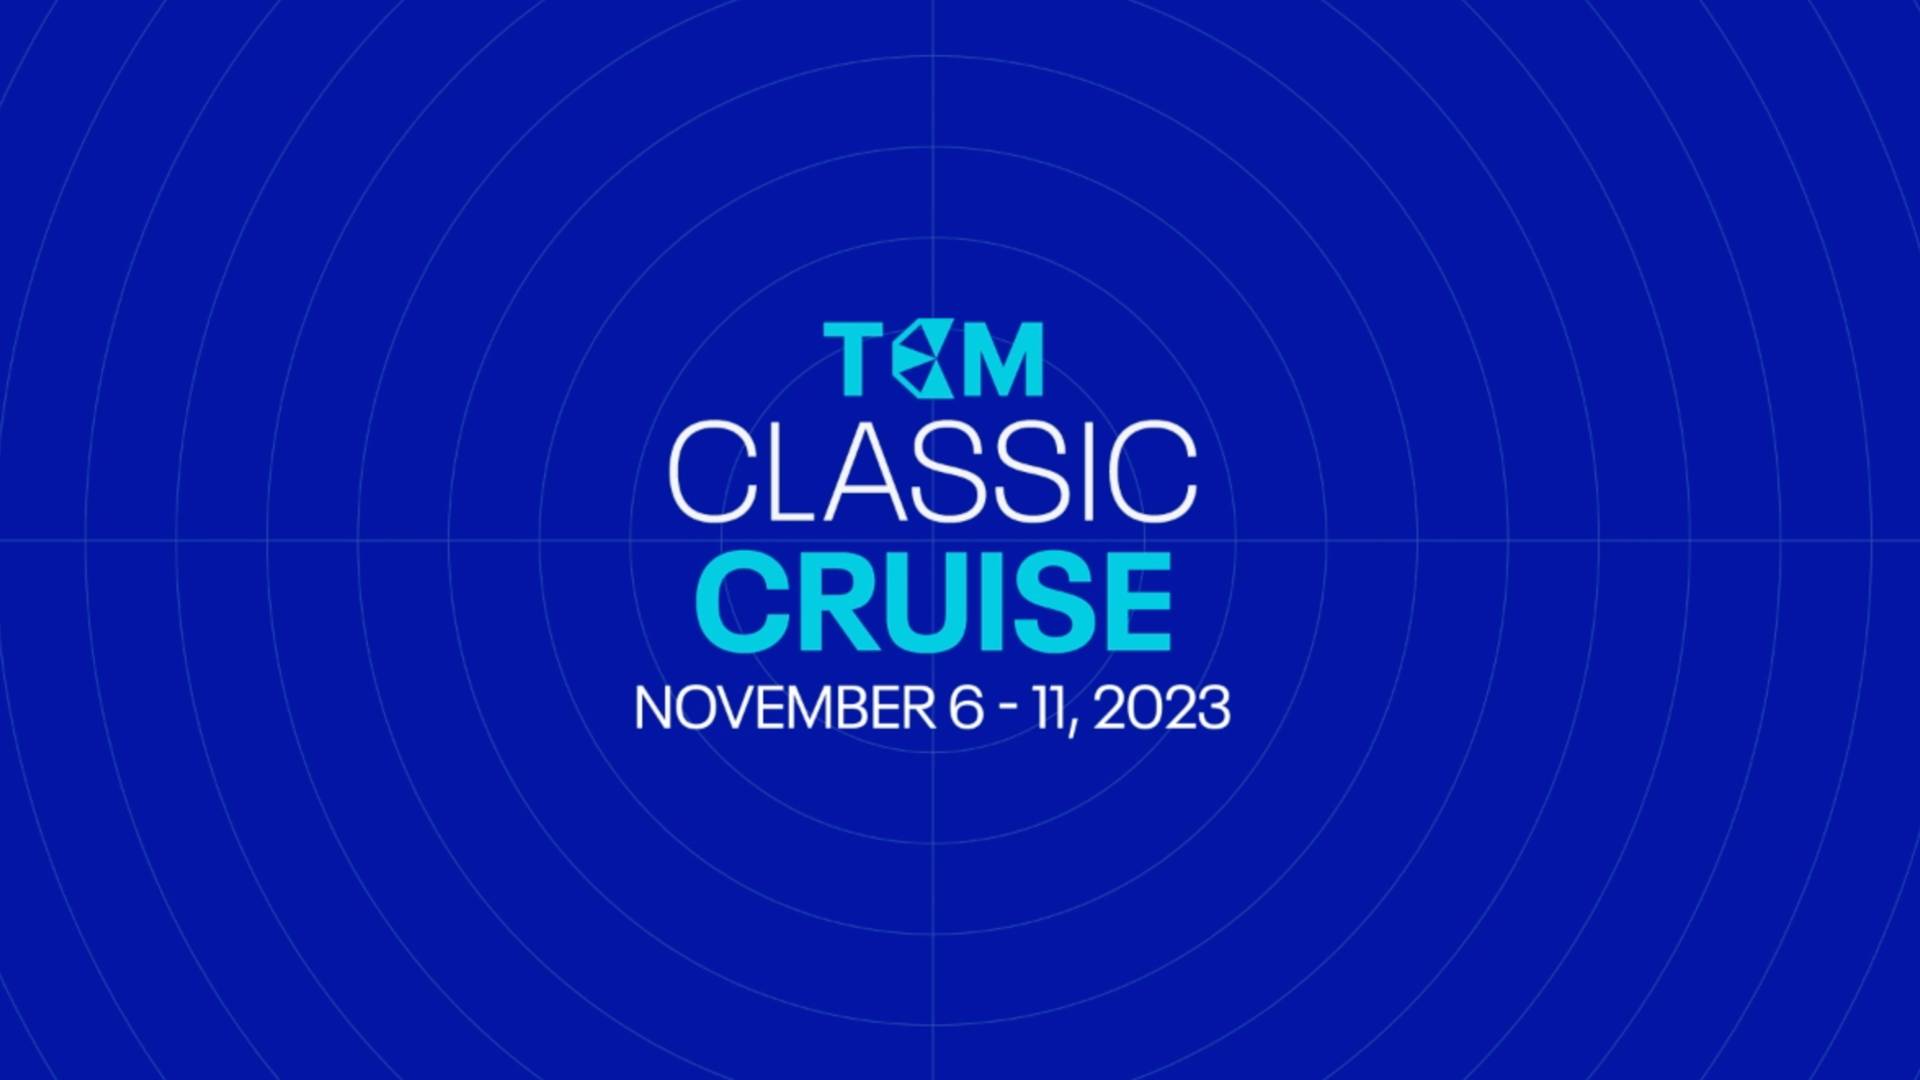 https://wbd.com/wp-content/uploads/2022/11/Cruise-Image.jpg